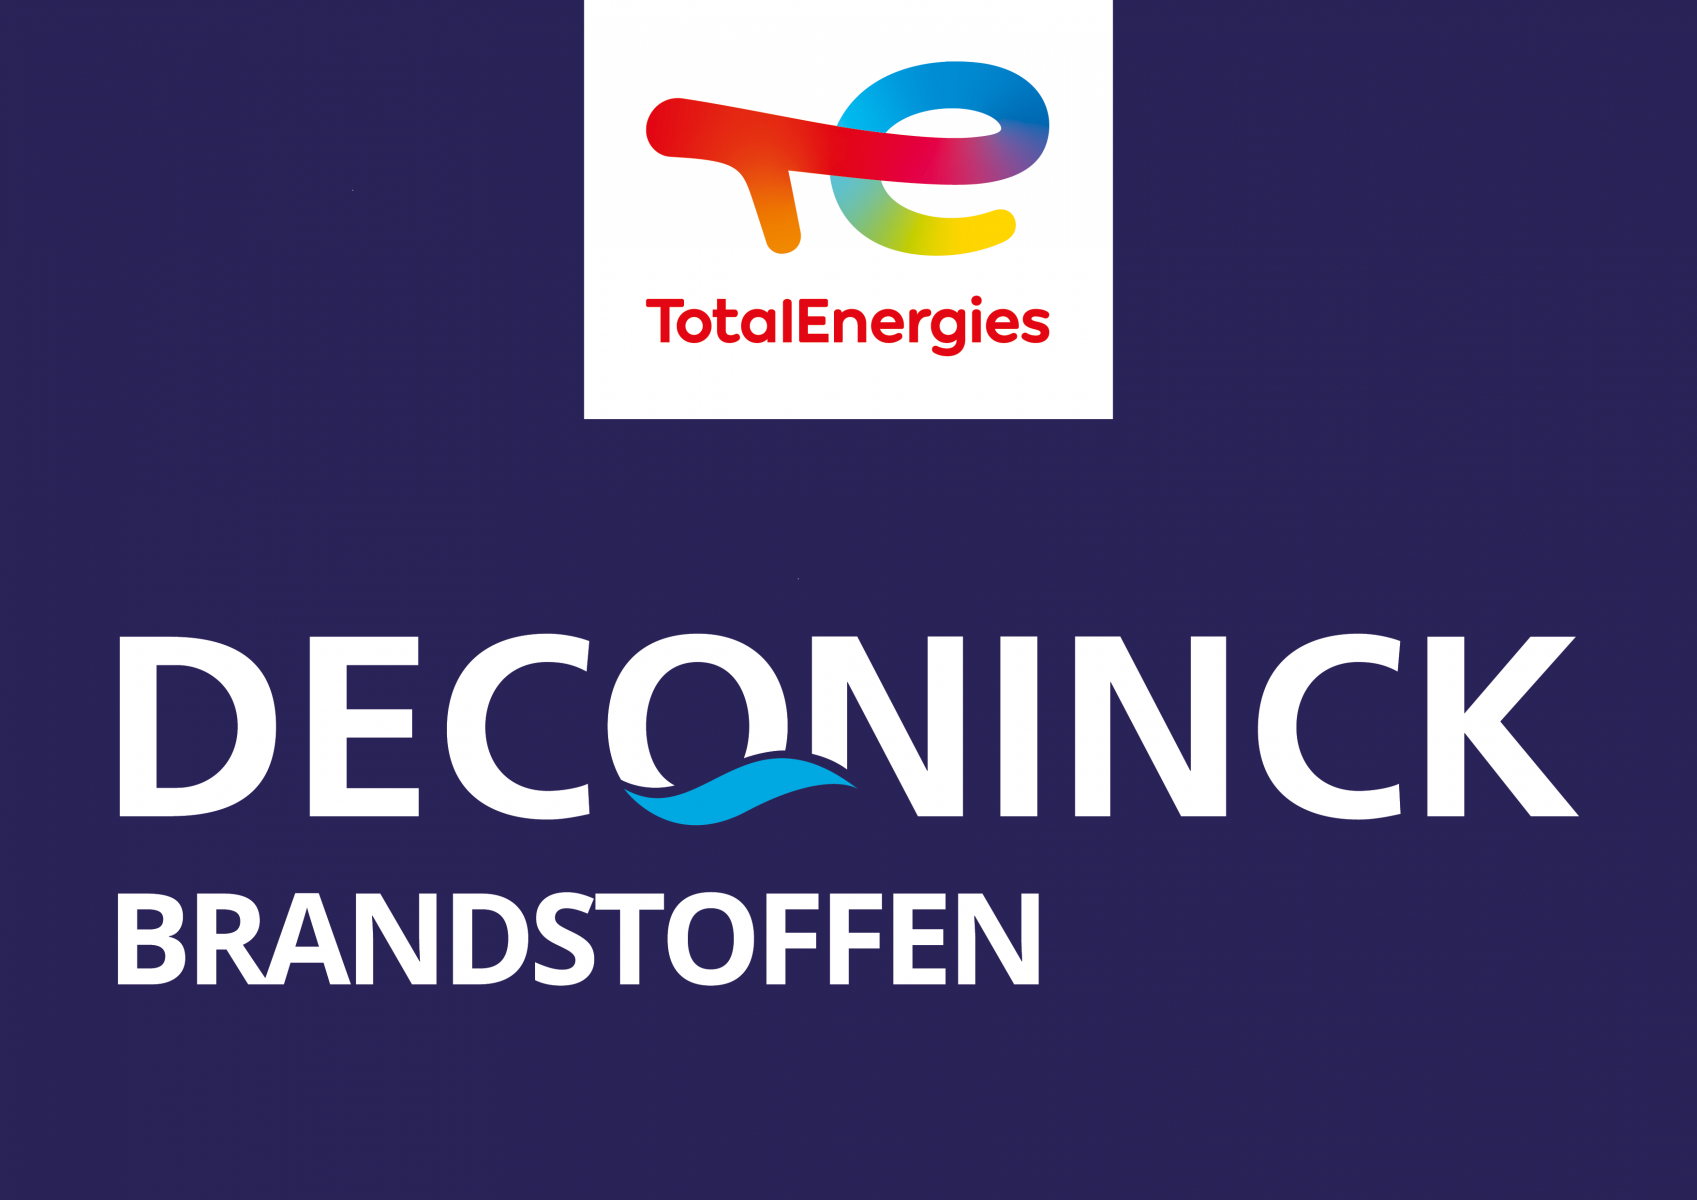 Deconinck-logo-totalenergies_neg